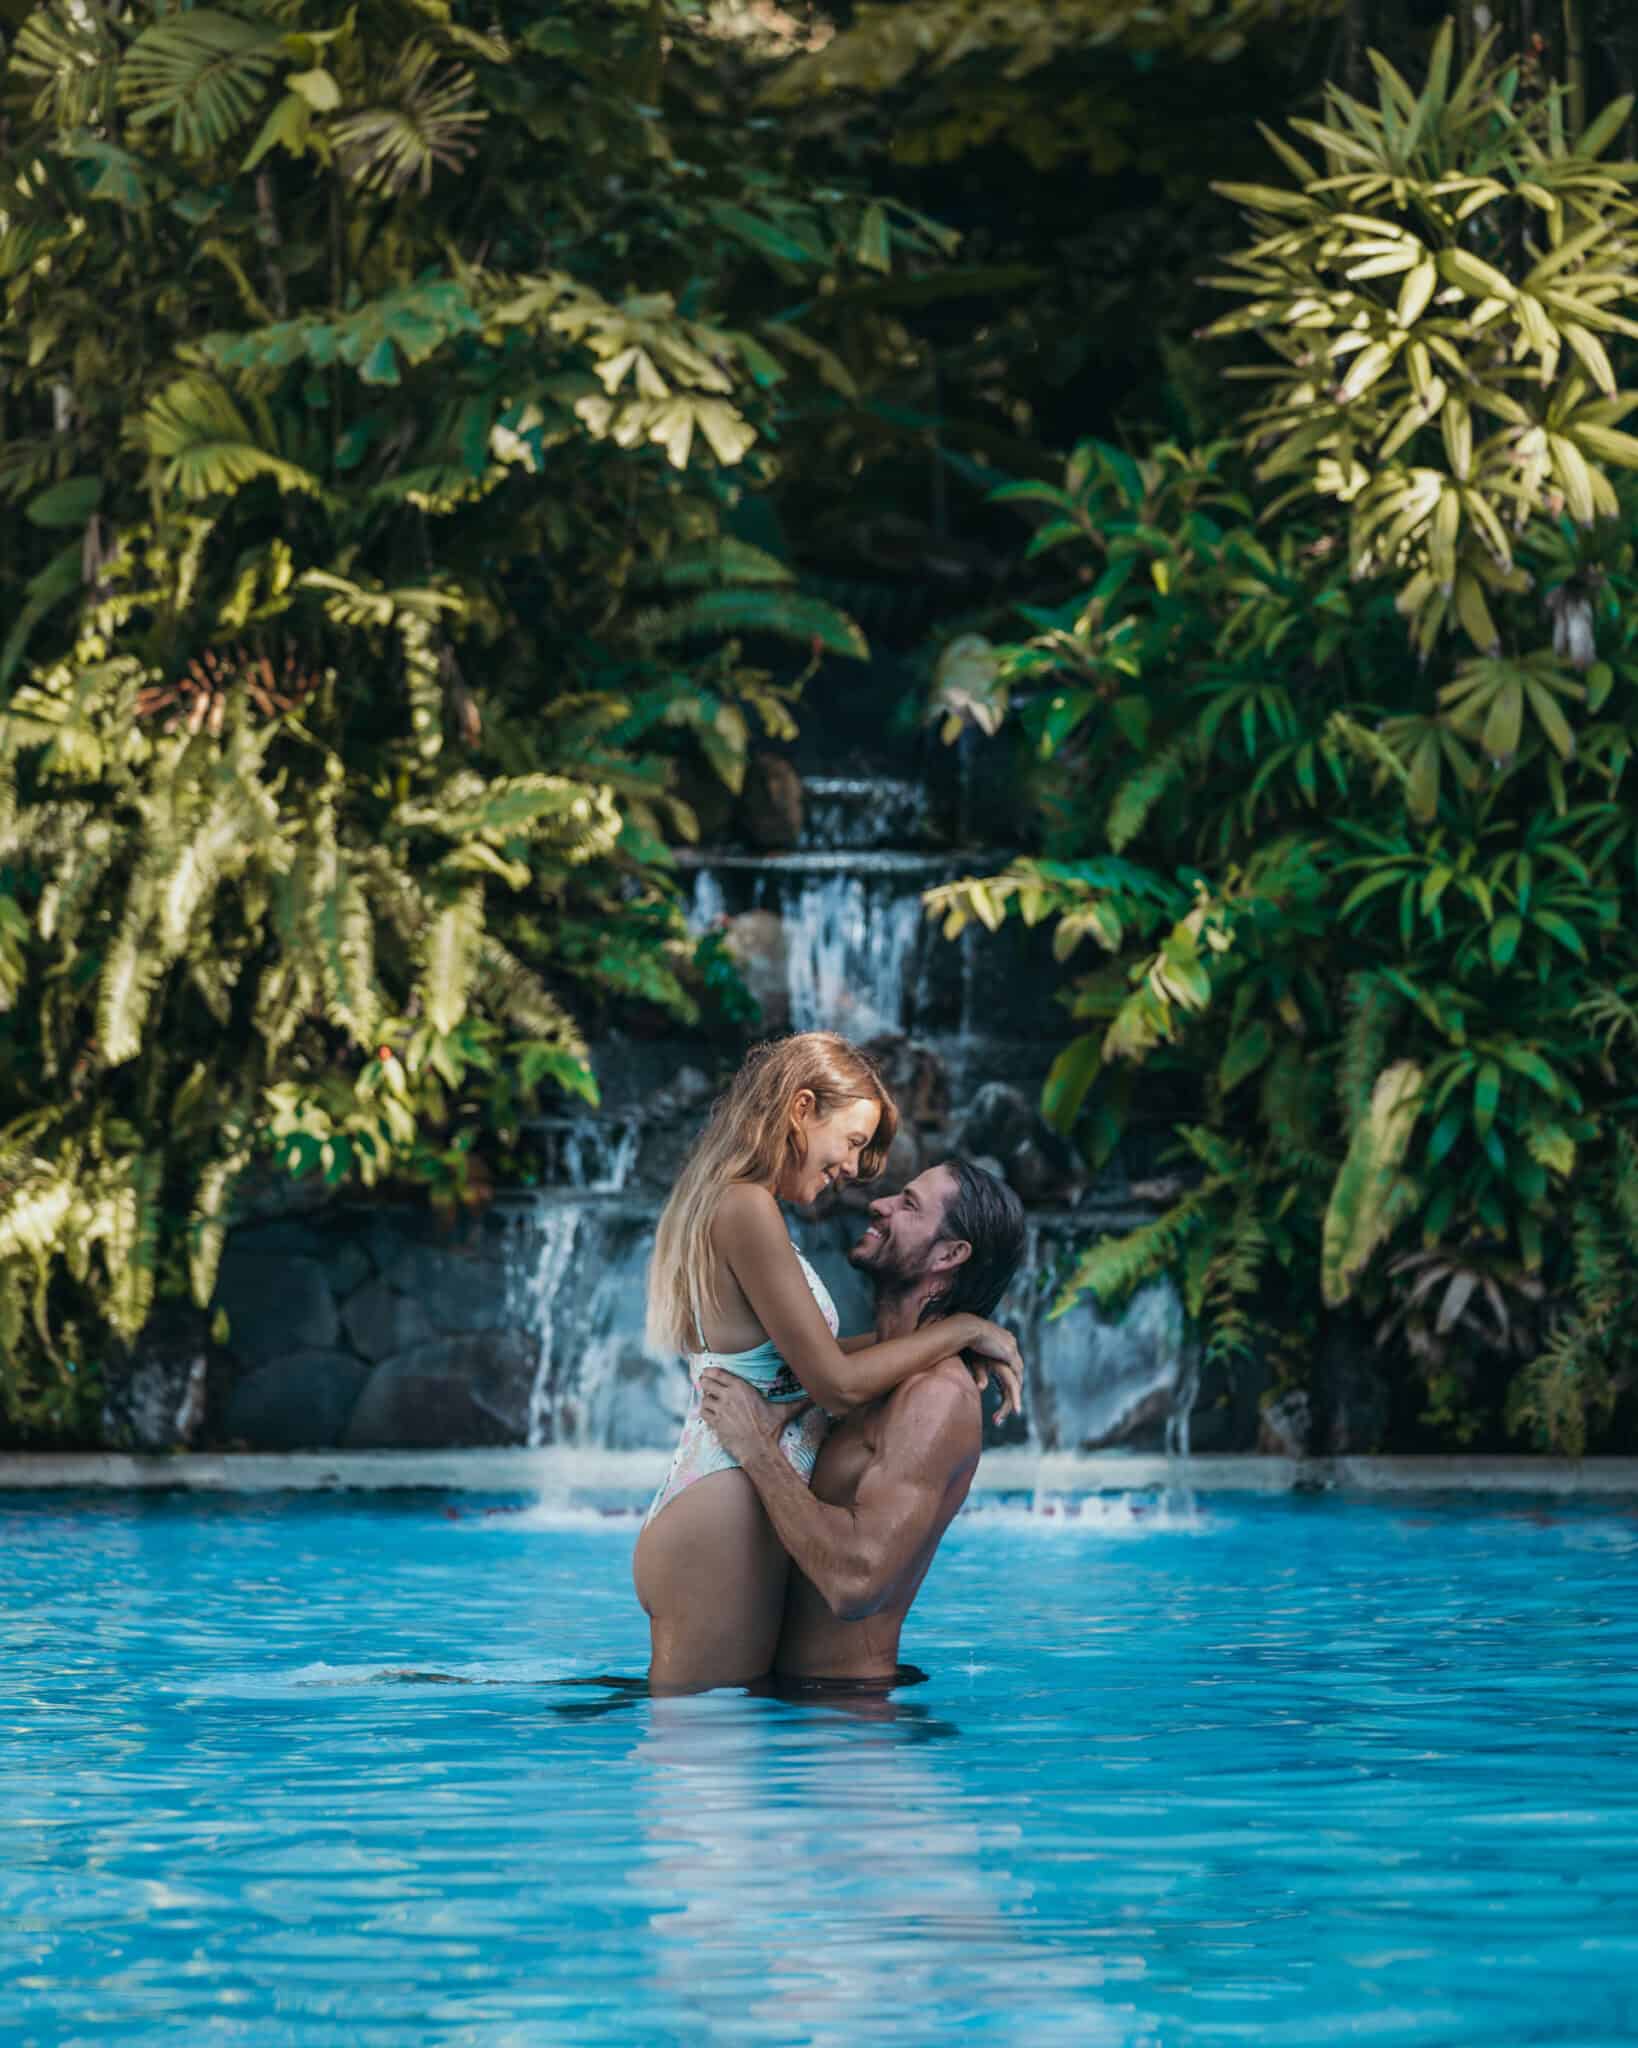 A couple embracing in a swimming pool in Tortuguero, Costa Rica.